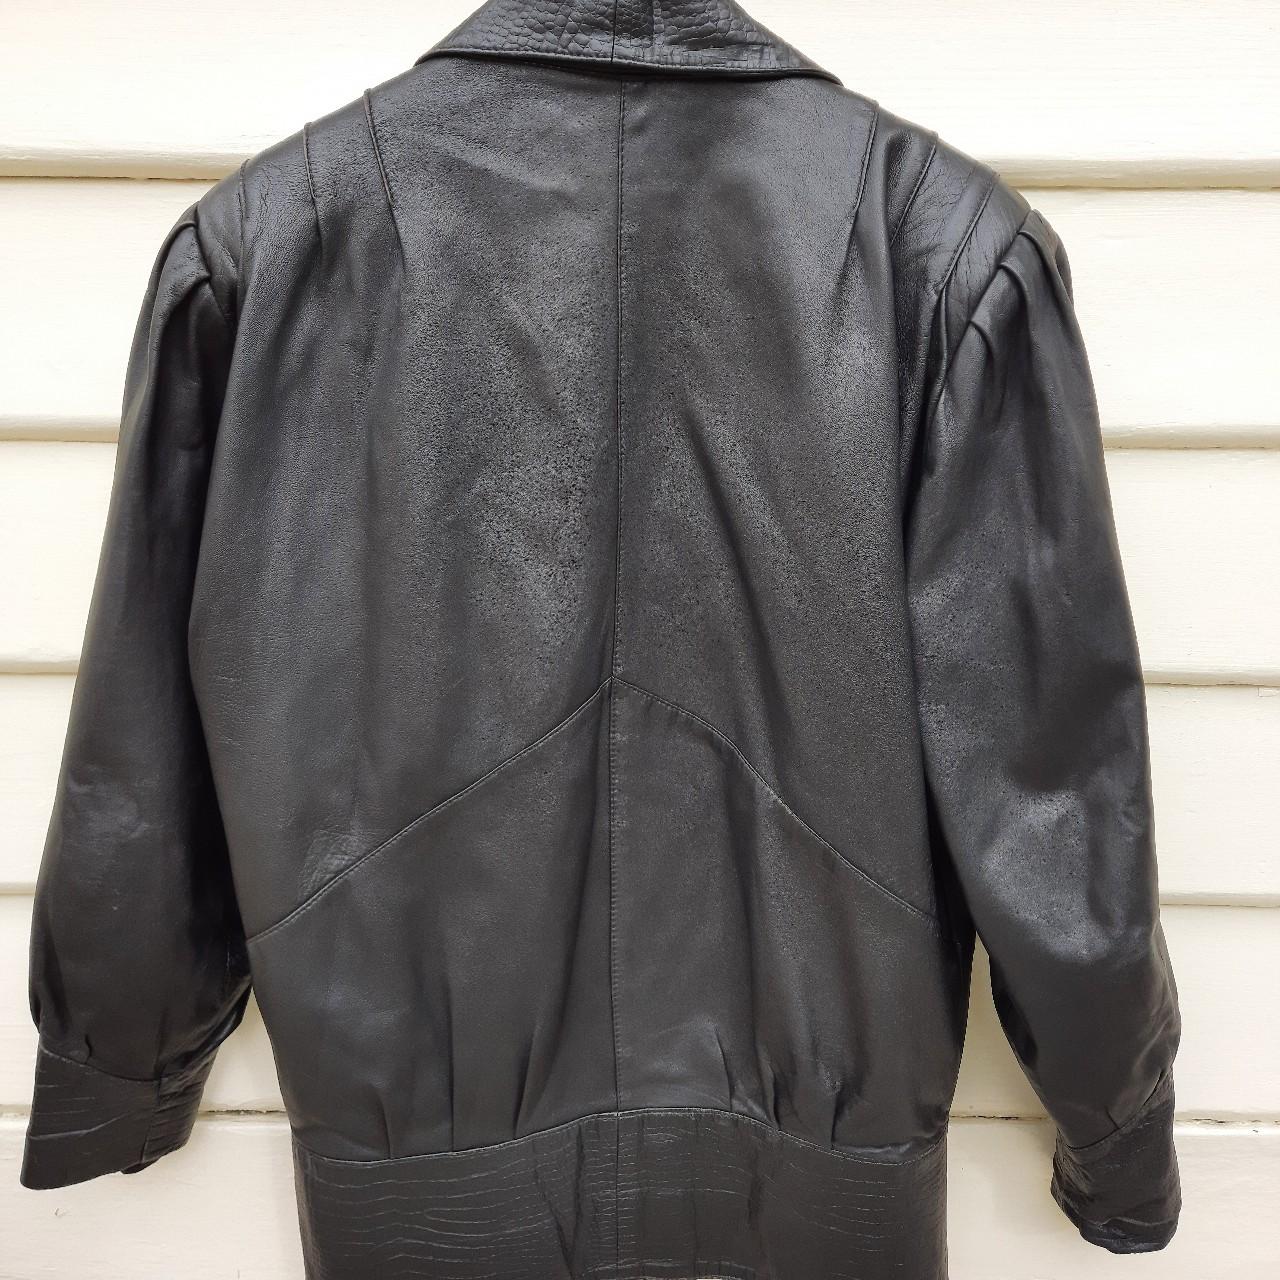 Johenic made in Australia, 100% leather jacket.... - Depop